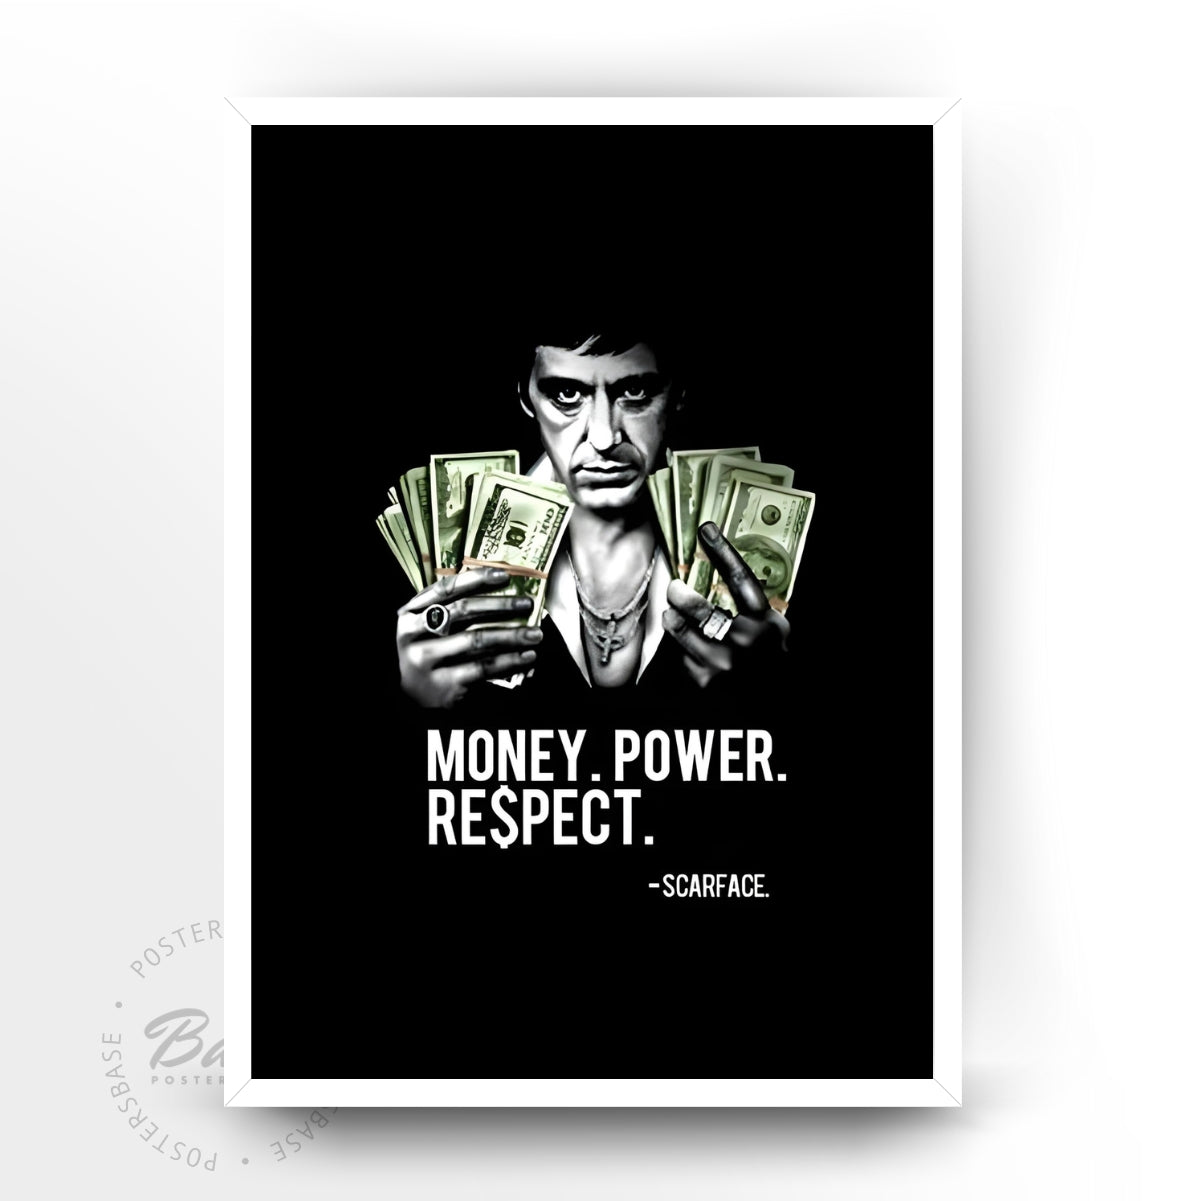 Scarface 'Money Power Respect'